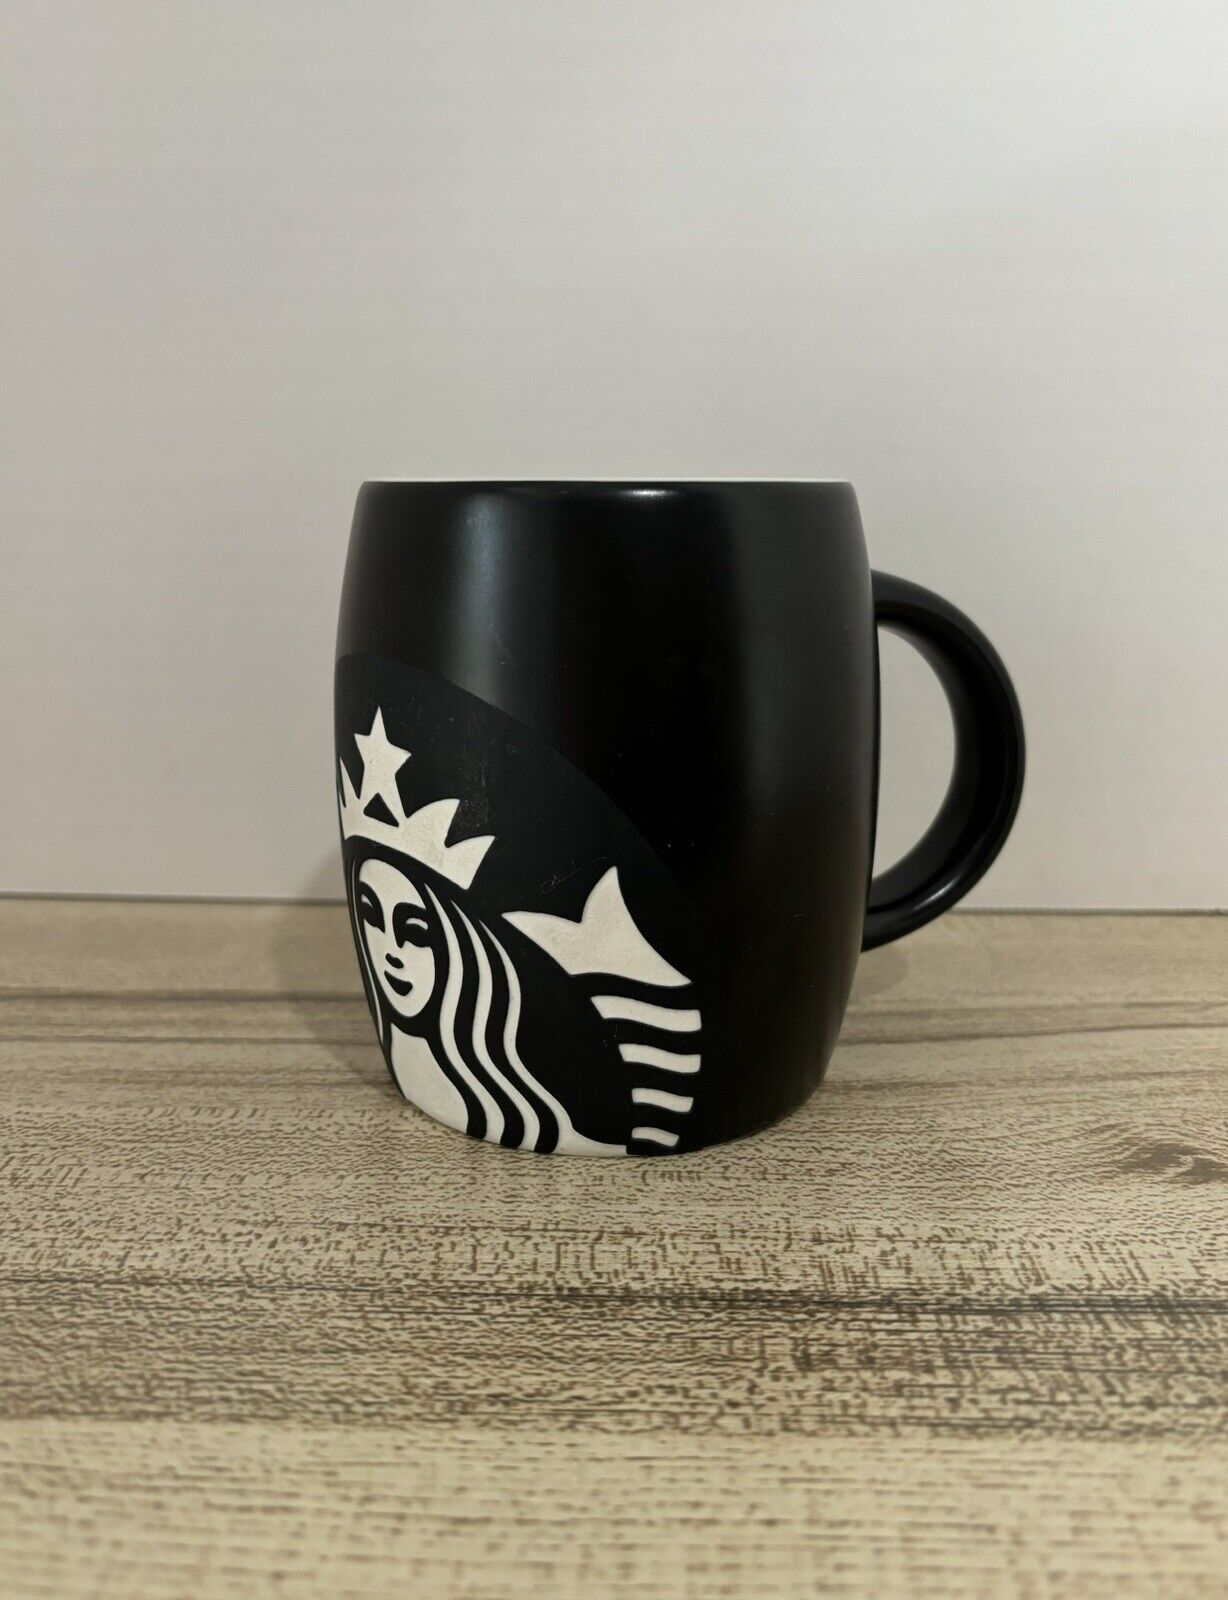 2011 Starbucks Etched Mermaid Black and White Siren Logo Coffee Cup Mug